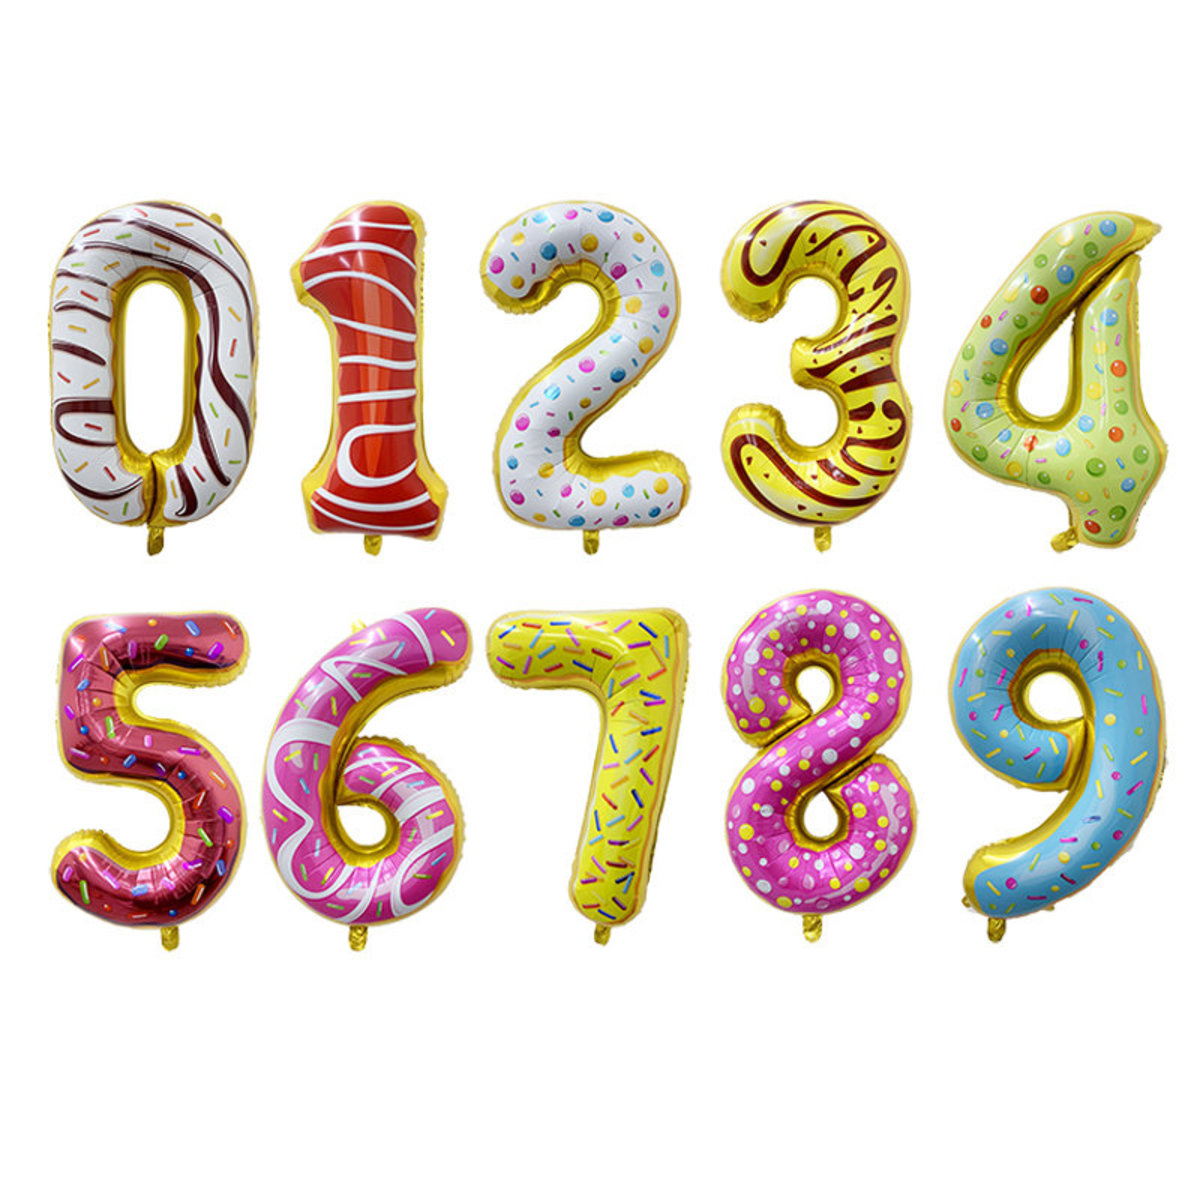 Festive/Party/Banquet/Birthday/Balloon/Decoration - Donut Chocolate Digital Balloon 32-inch “0”